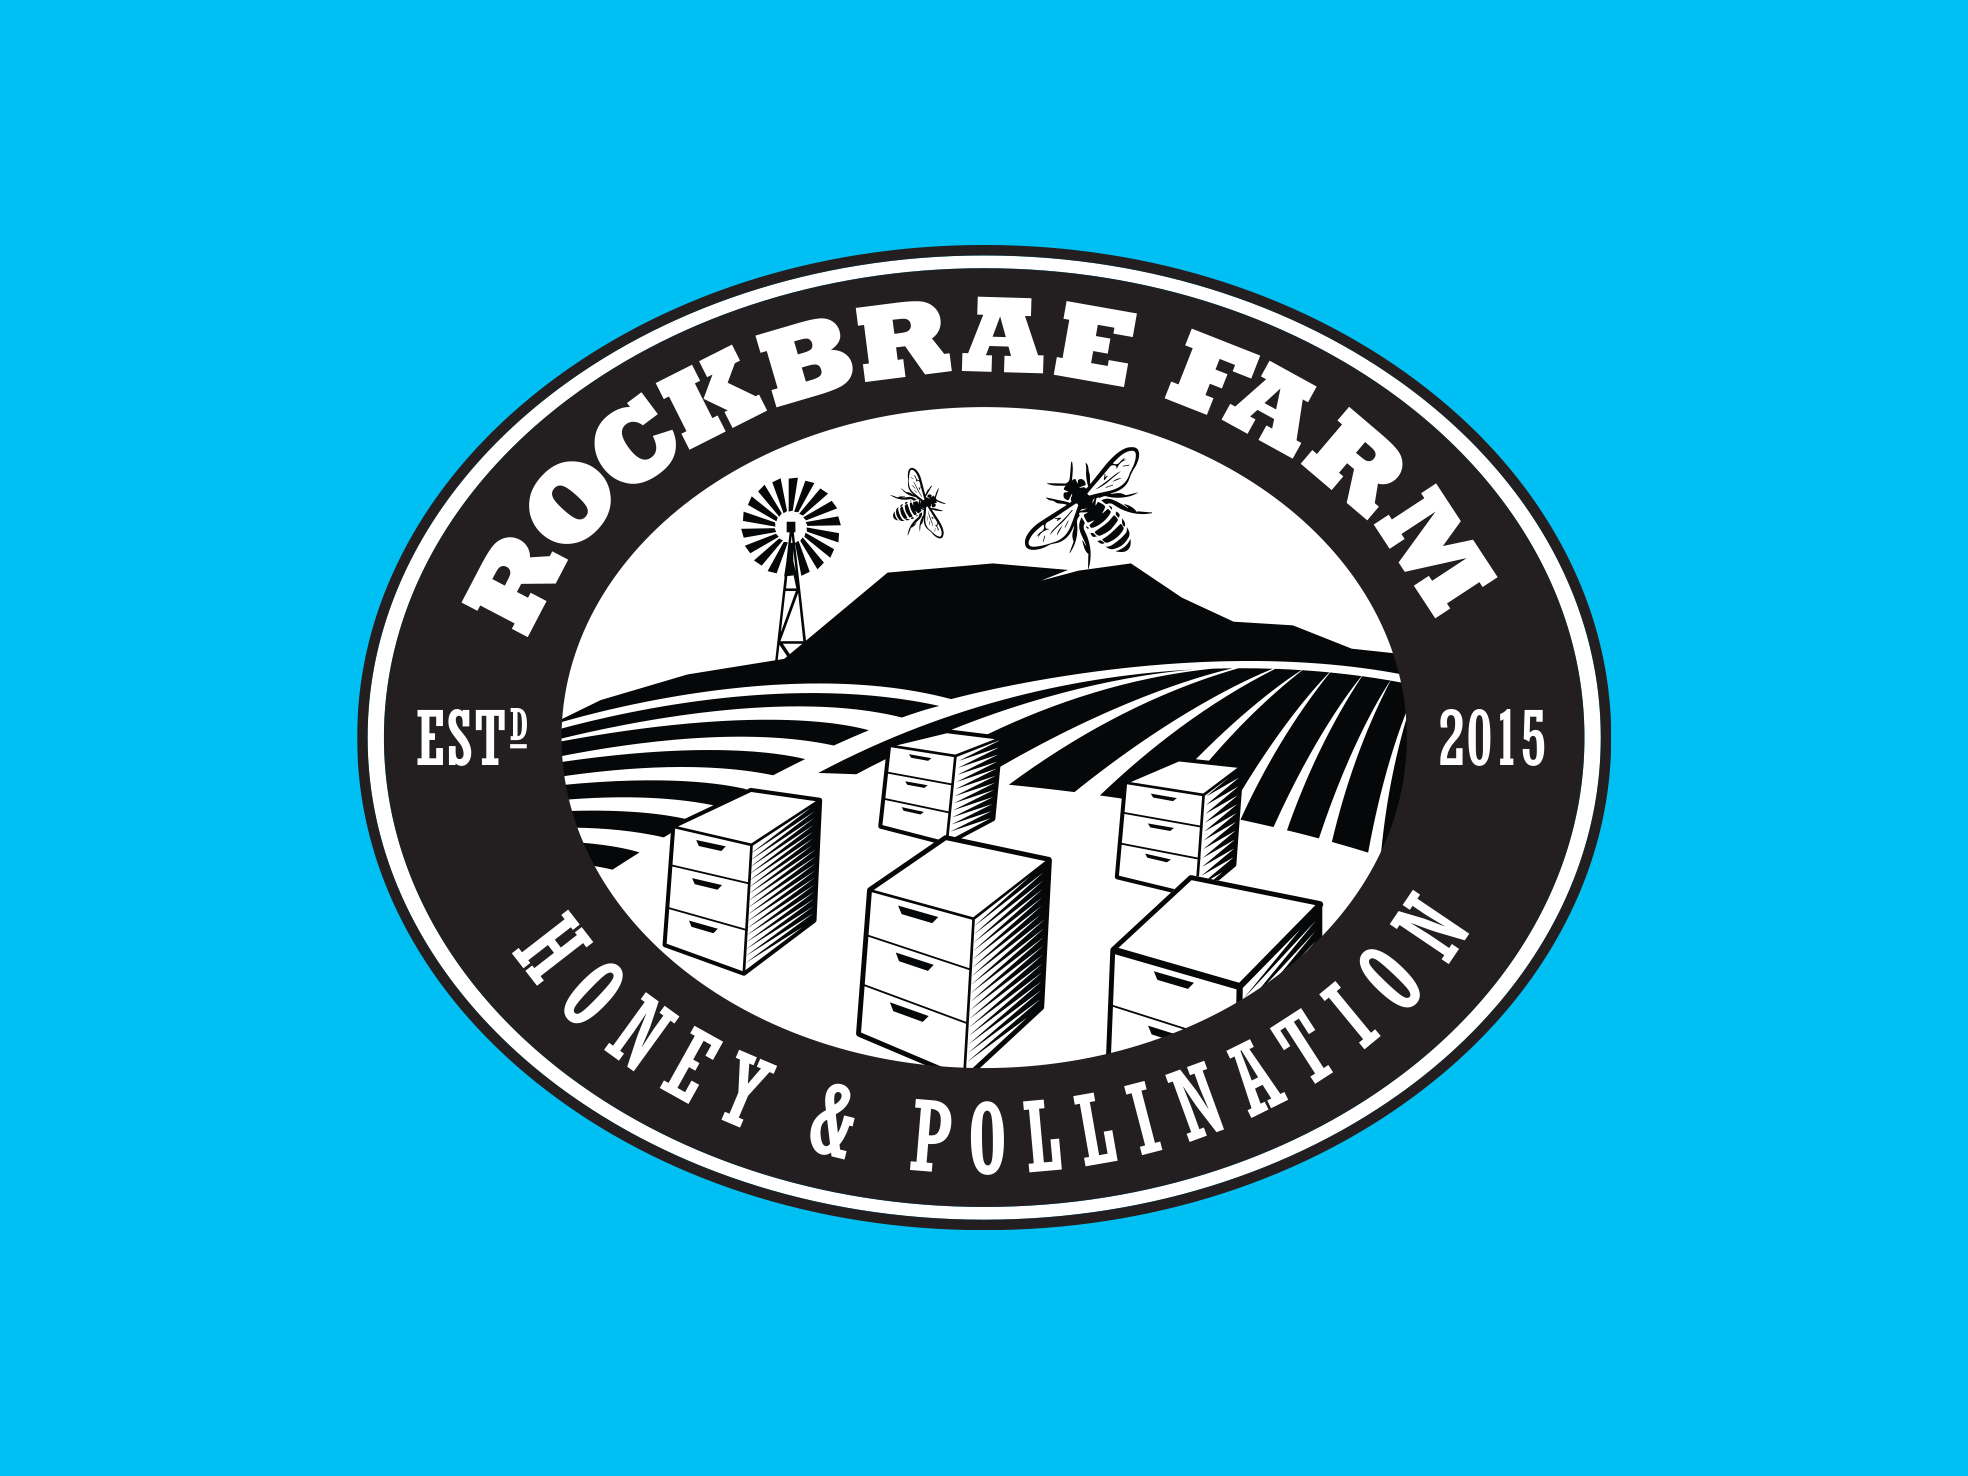 Professional Logo Design for Rockbrae Farm: Traditional, Country, Farmer’s Market Vibe